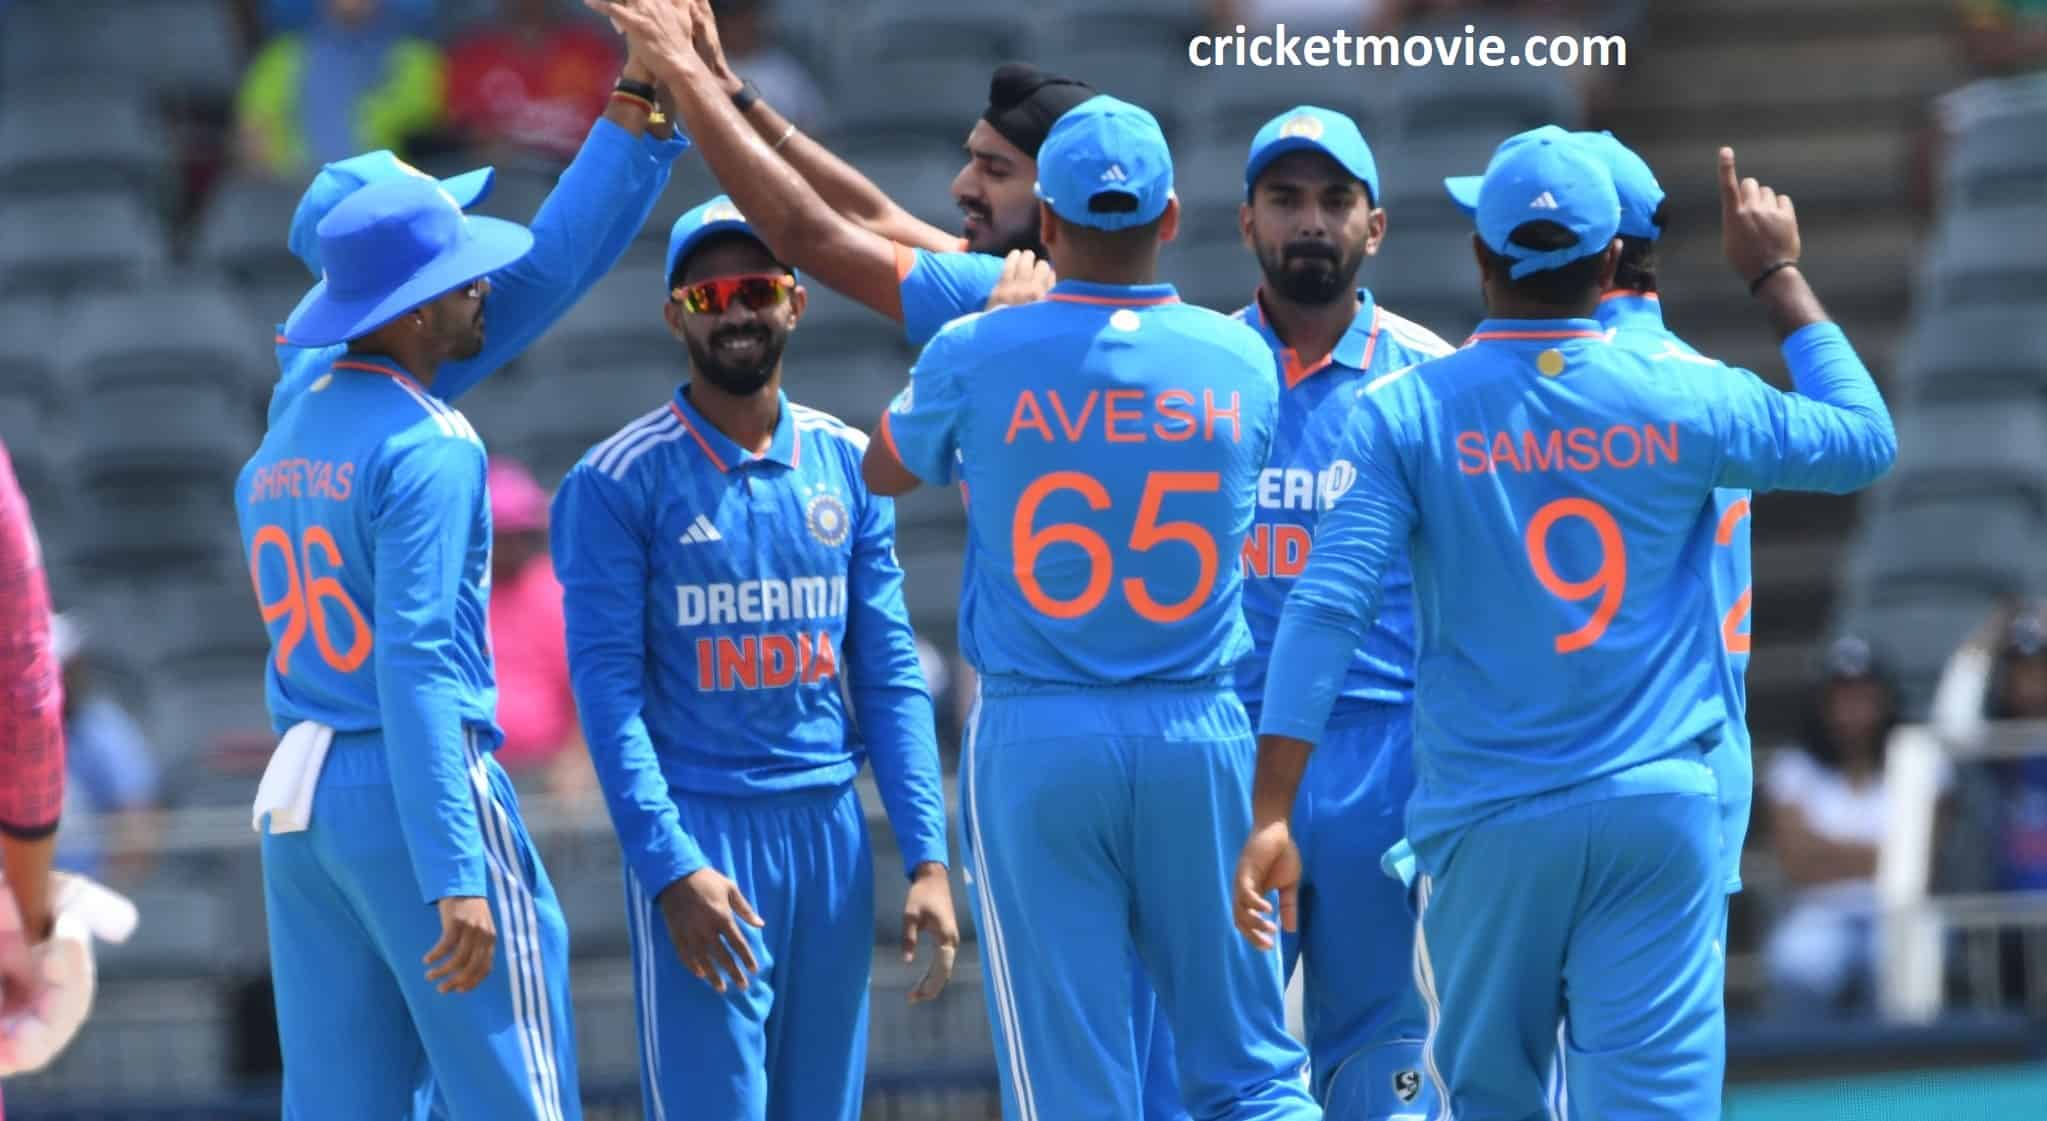 India won 1st ODI against South Africa-cricketmovie.com